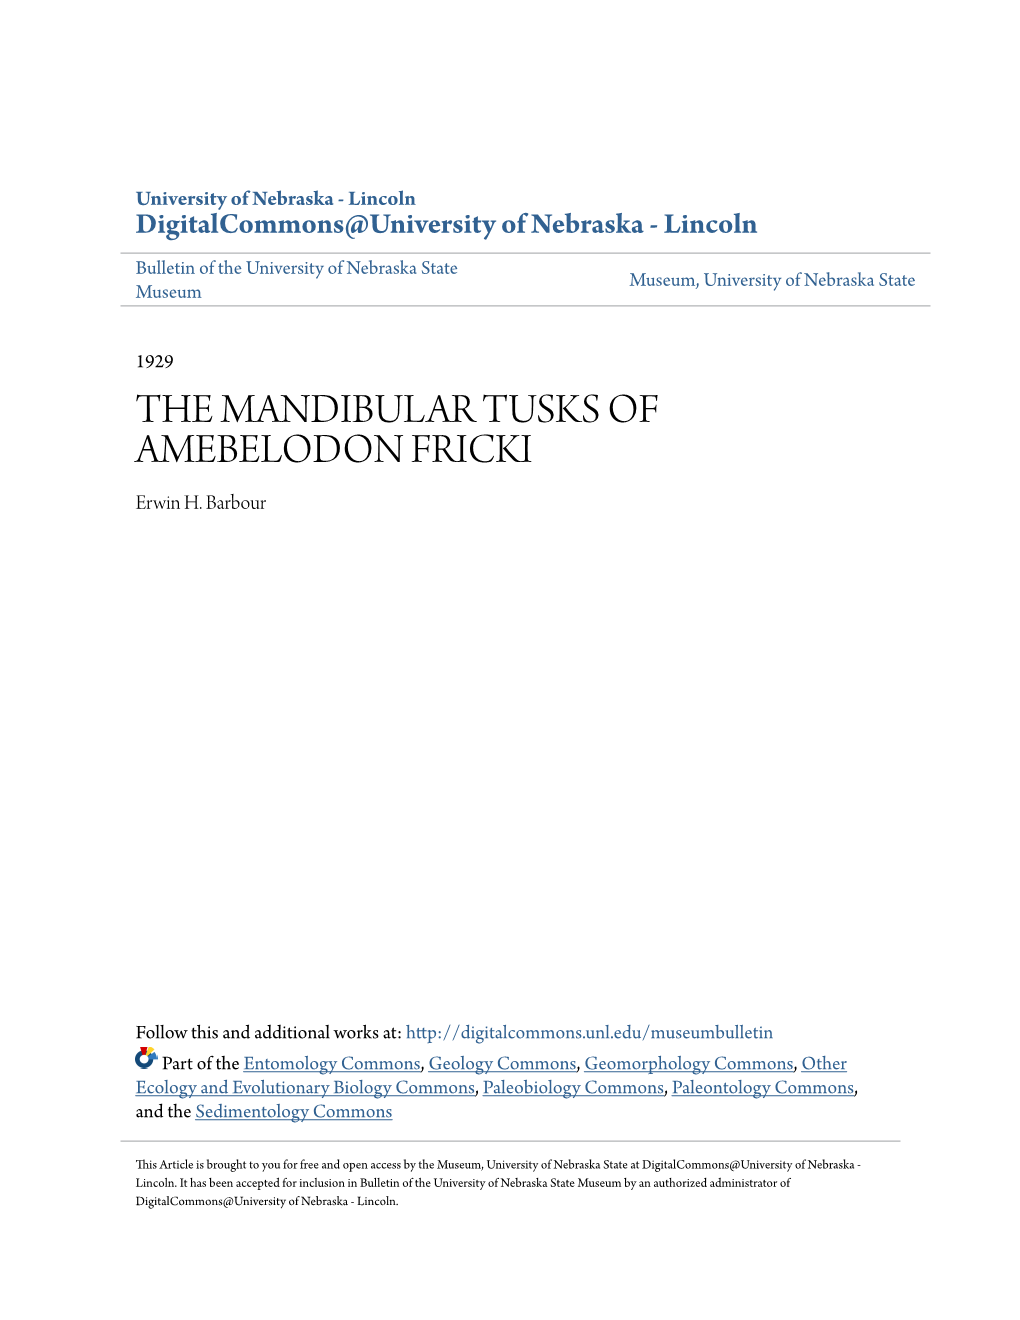 THE MANDIBULAR TUSKS of AMEBELODON FRICKI Erwin H